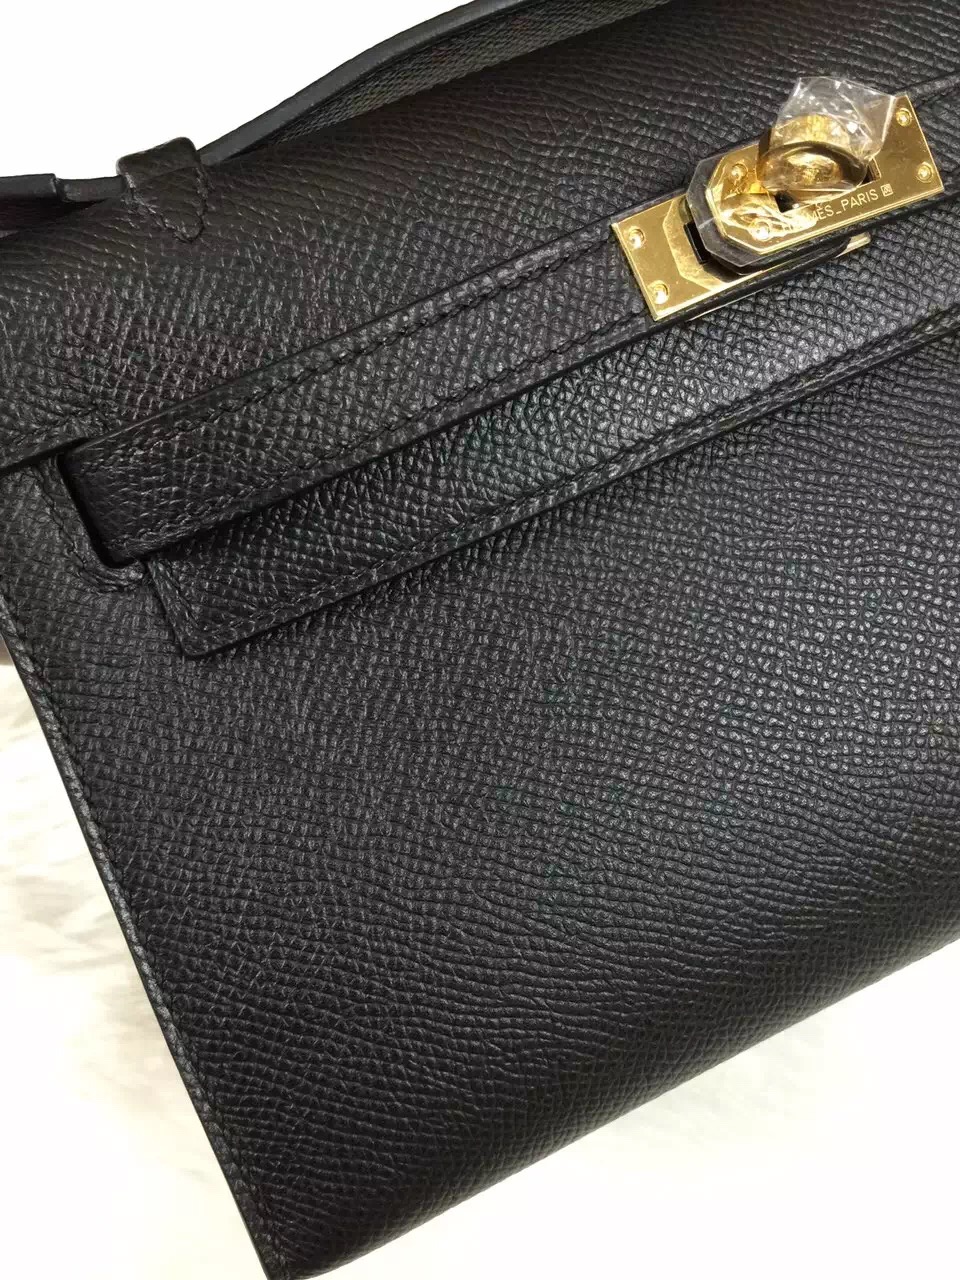 Discount Hermes Black Epsom Leather Mini Kelly Bag Gold Hardware Online